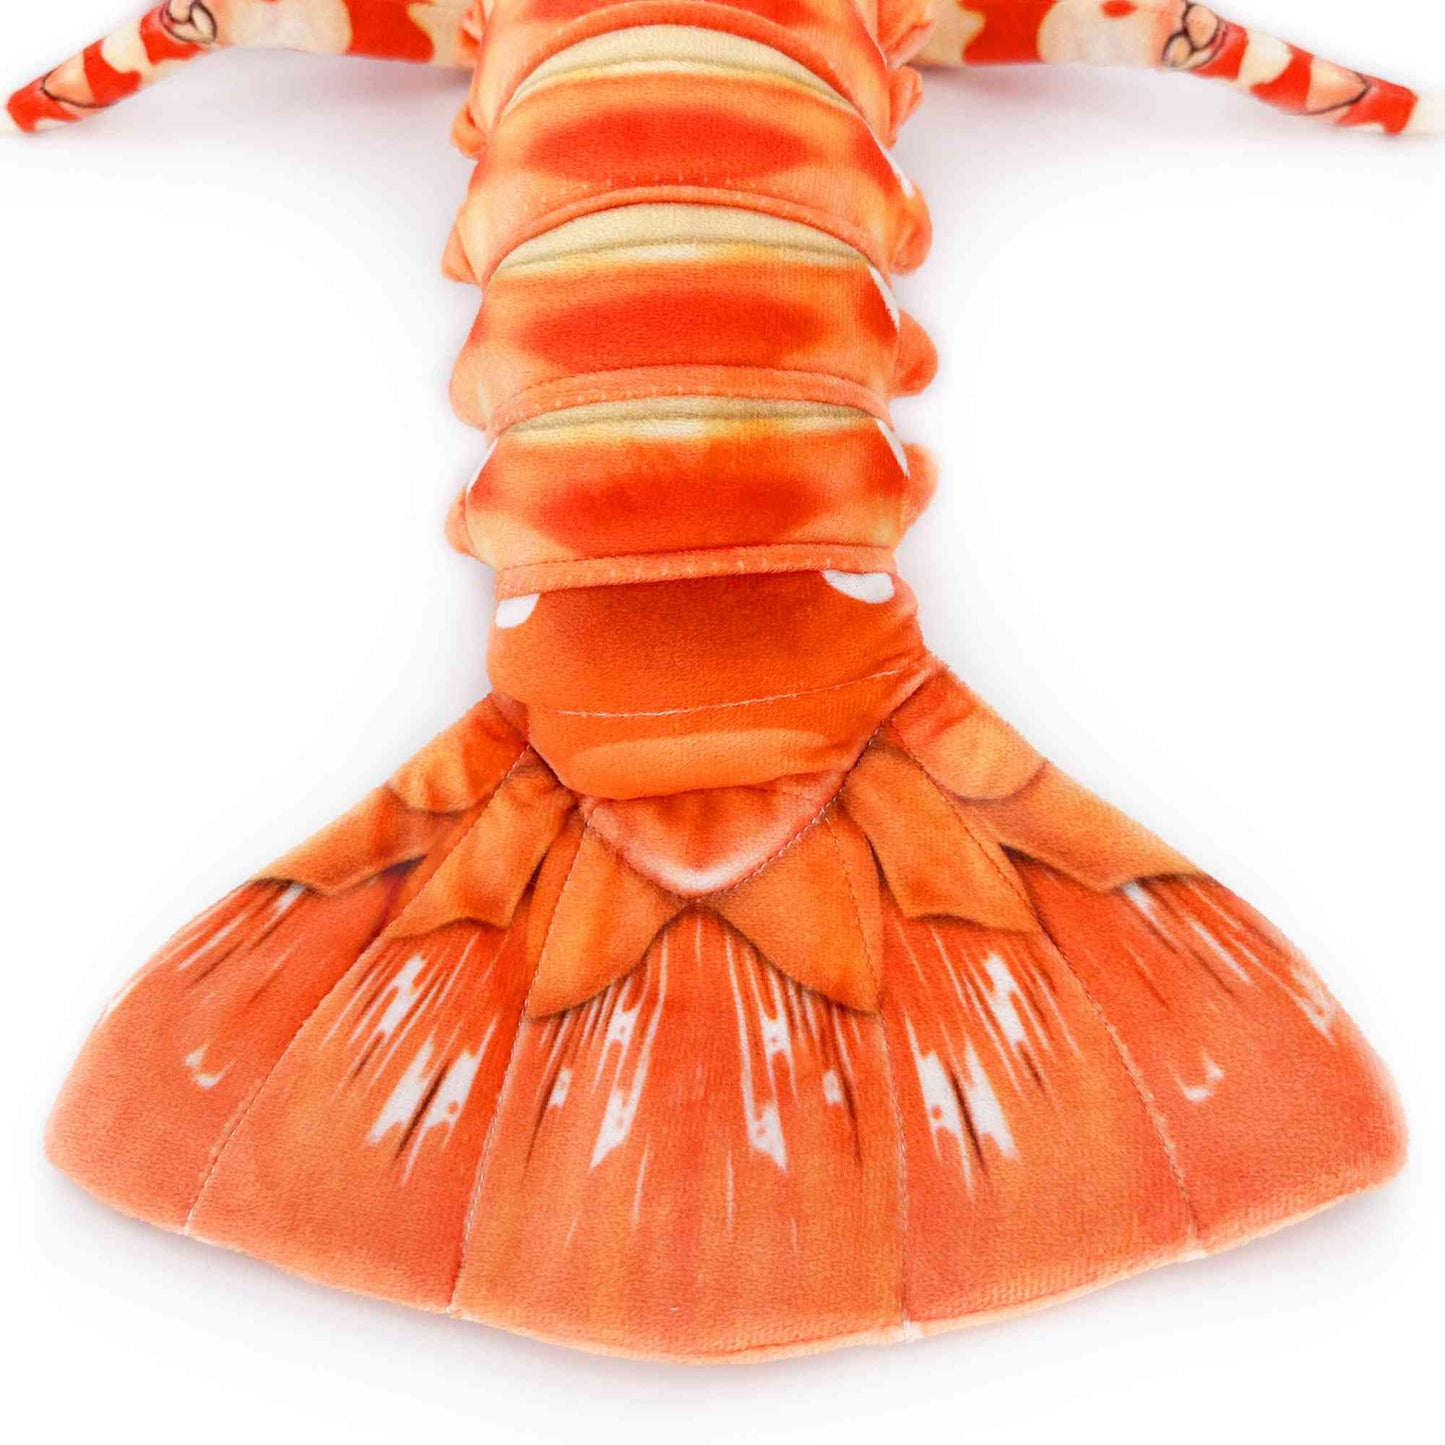 southern rock lobster Jasus edwardsii tail